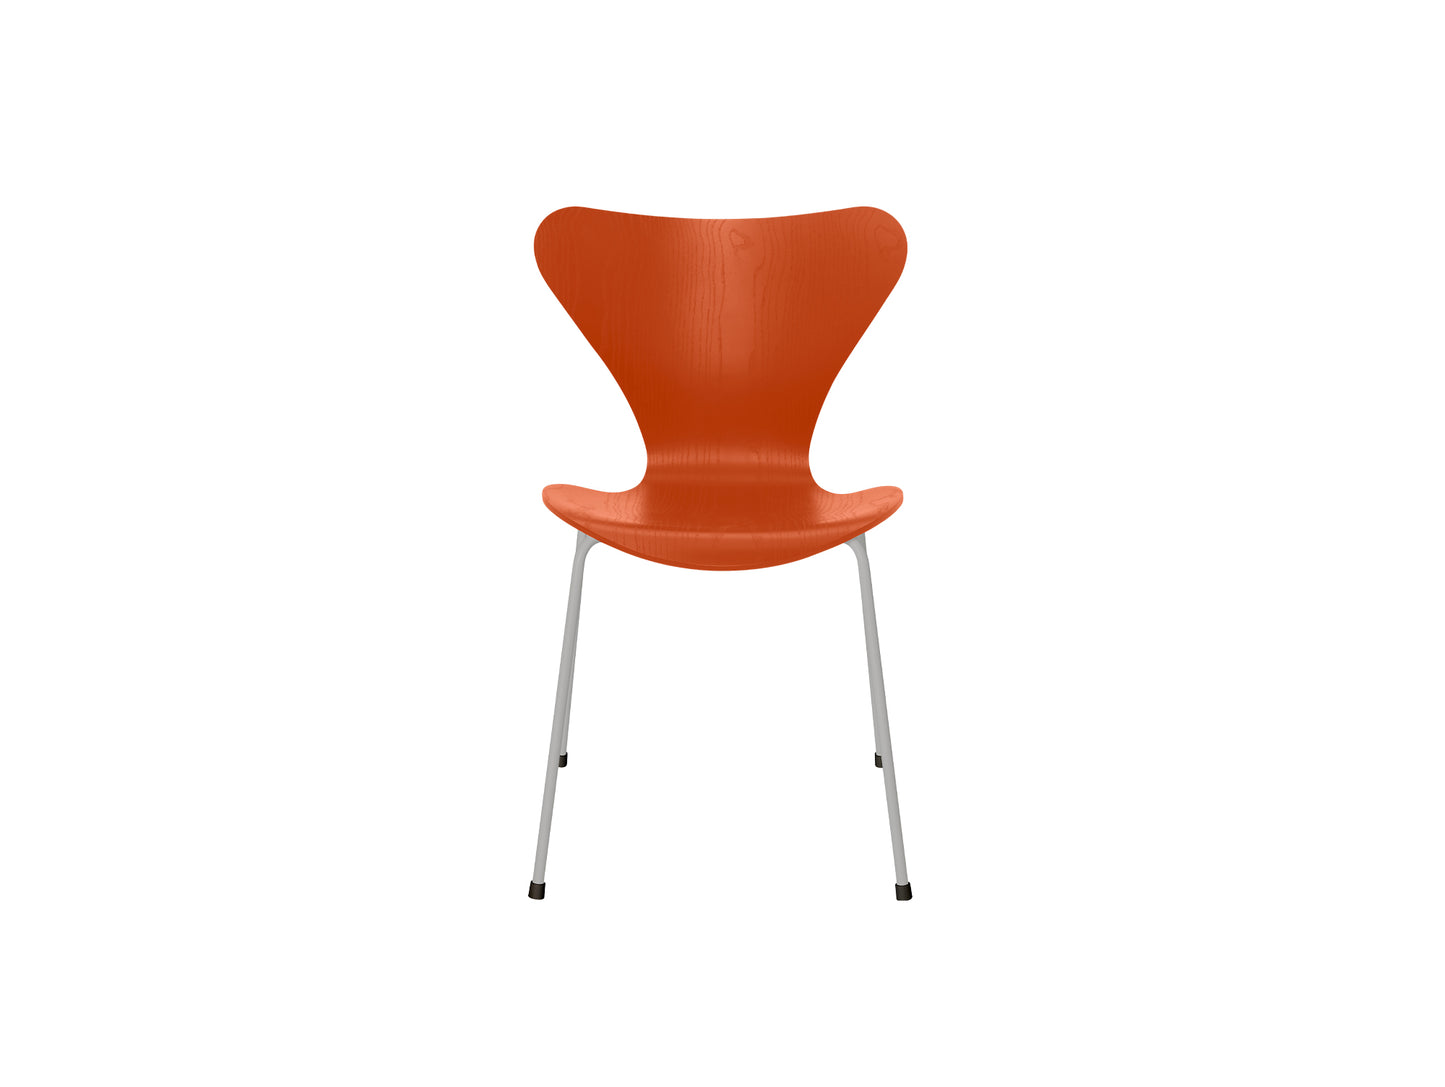 Series 7™ 3107 Dining Chair by Fritz Hansen - Paradise Orange Coloured Ash Veneer Shell / Nine Grey Steel